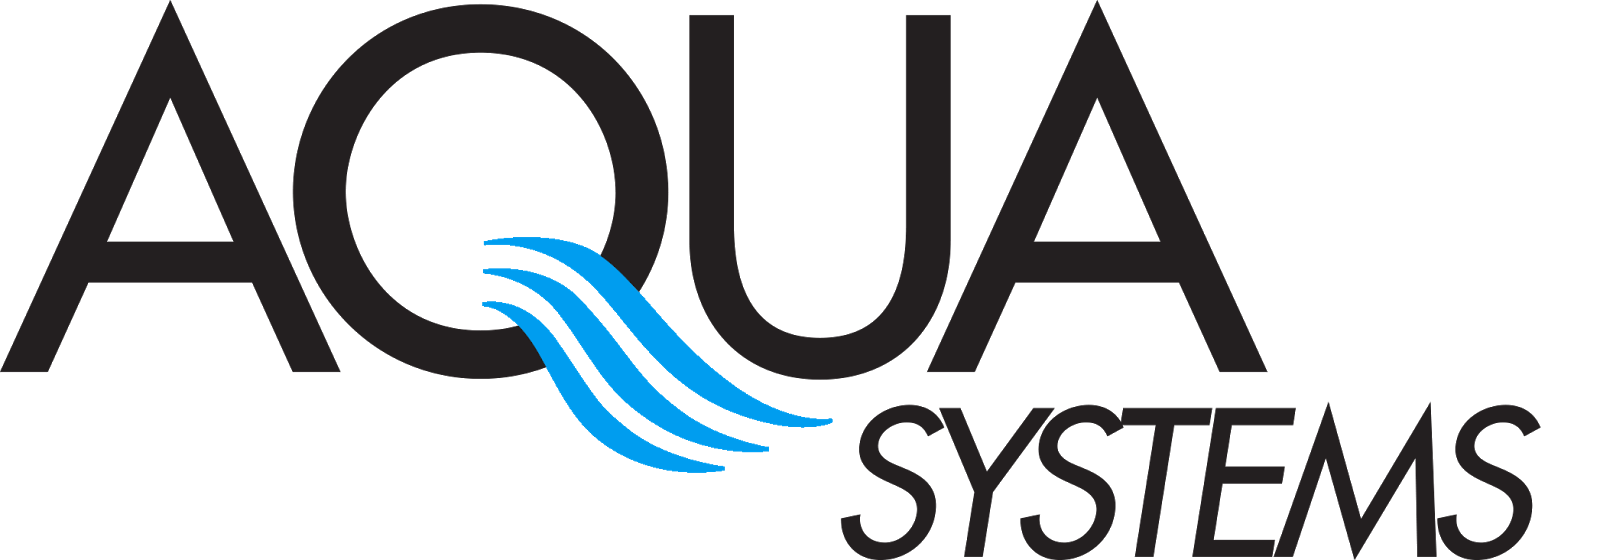 Аква система. Aquasystem логотип. Холдинг Аква лого. Логотип компании АКВАТОРГ. Системы кондиционирования логотип.